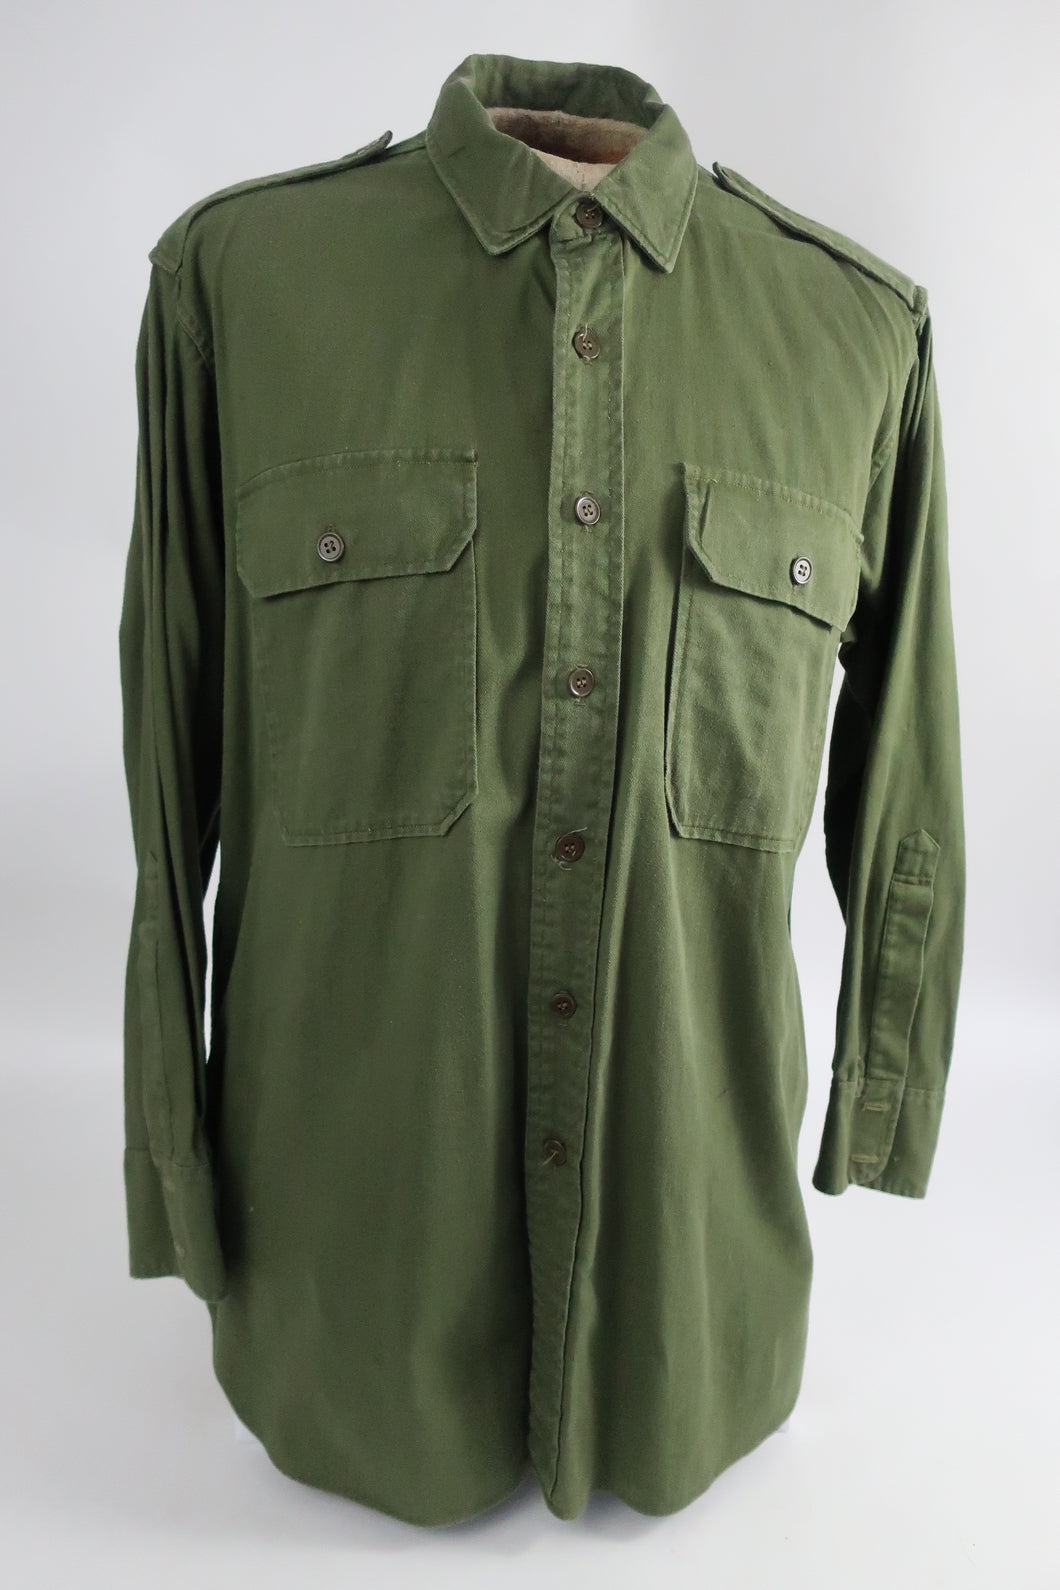 Genuine Australian Army Vietnam JG shirt dated 1968